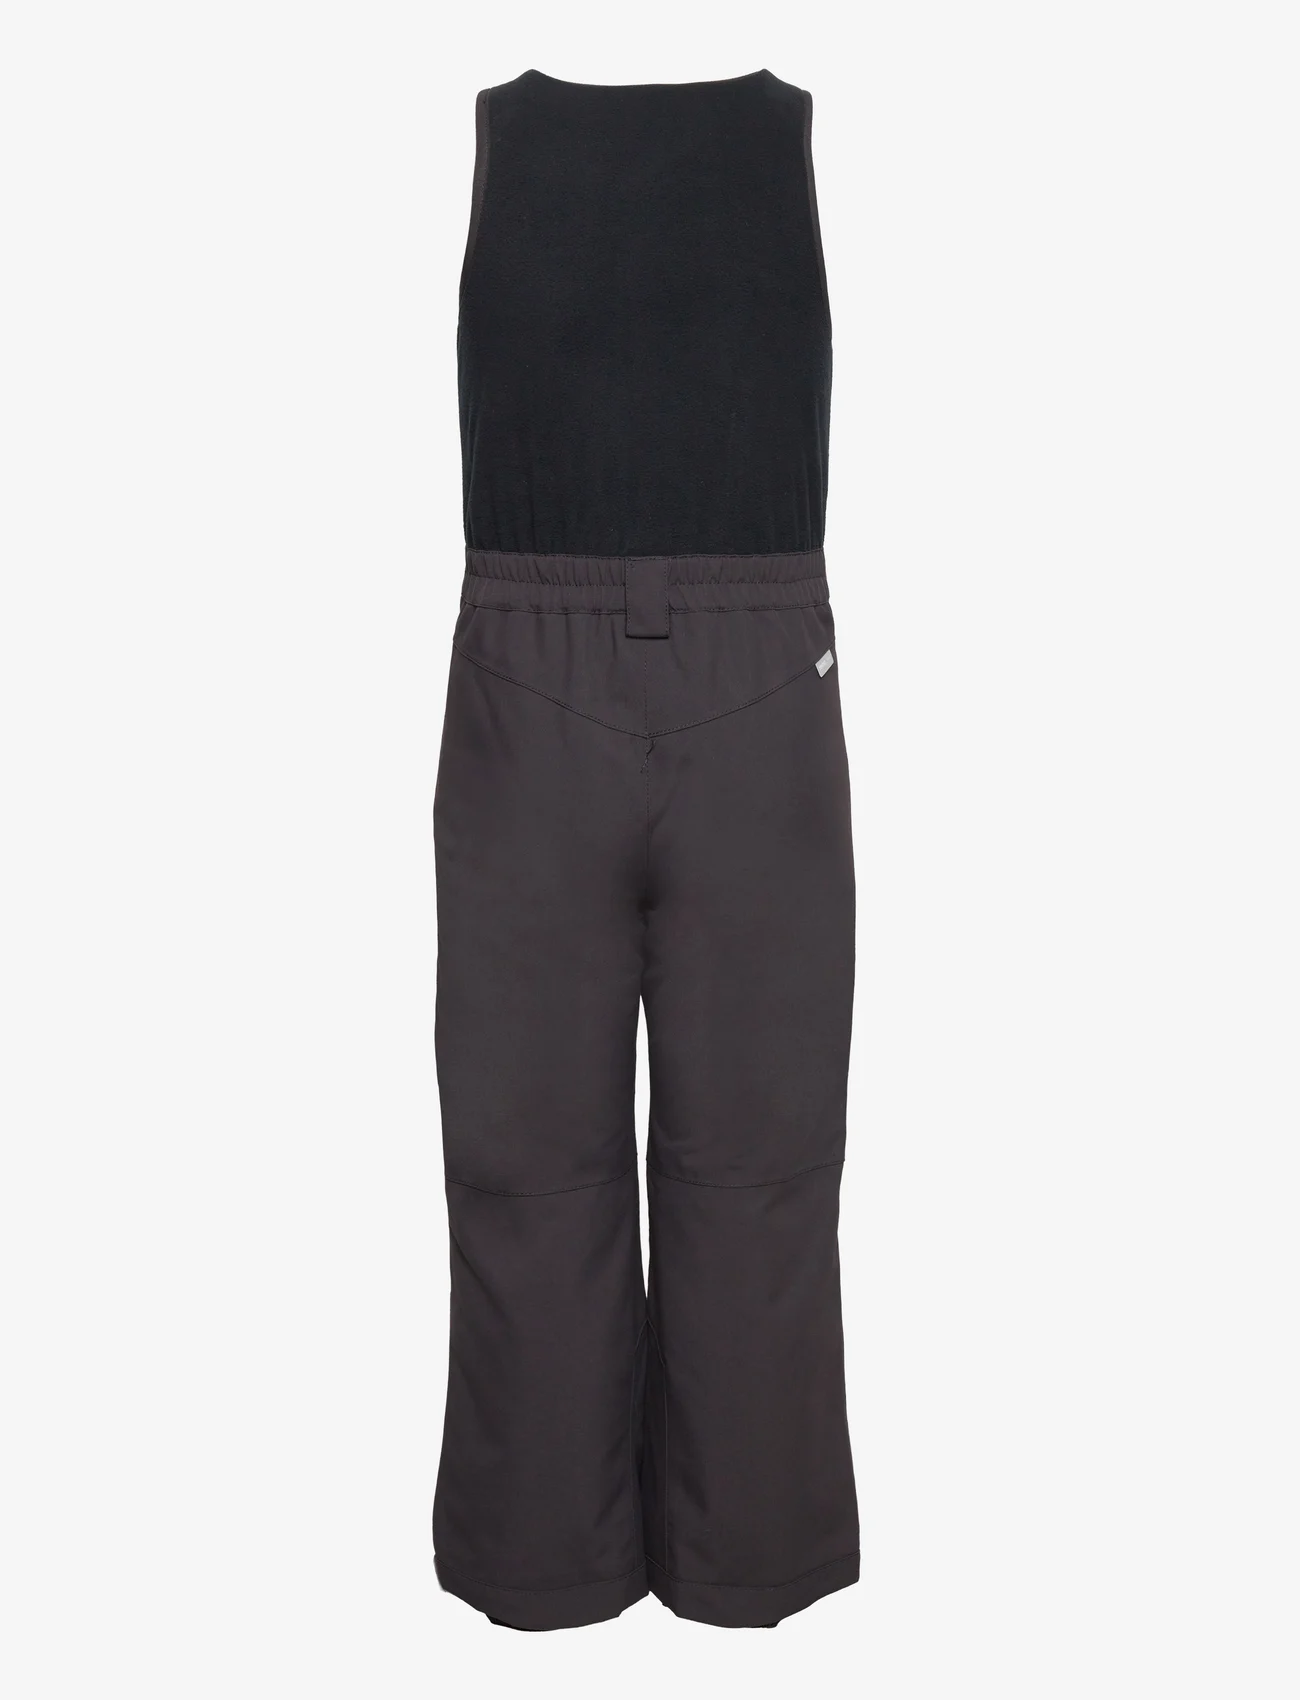 Reima - Reimatec winter pants, Oryon - apakšējais apģērbs - black - 1